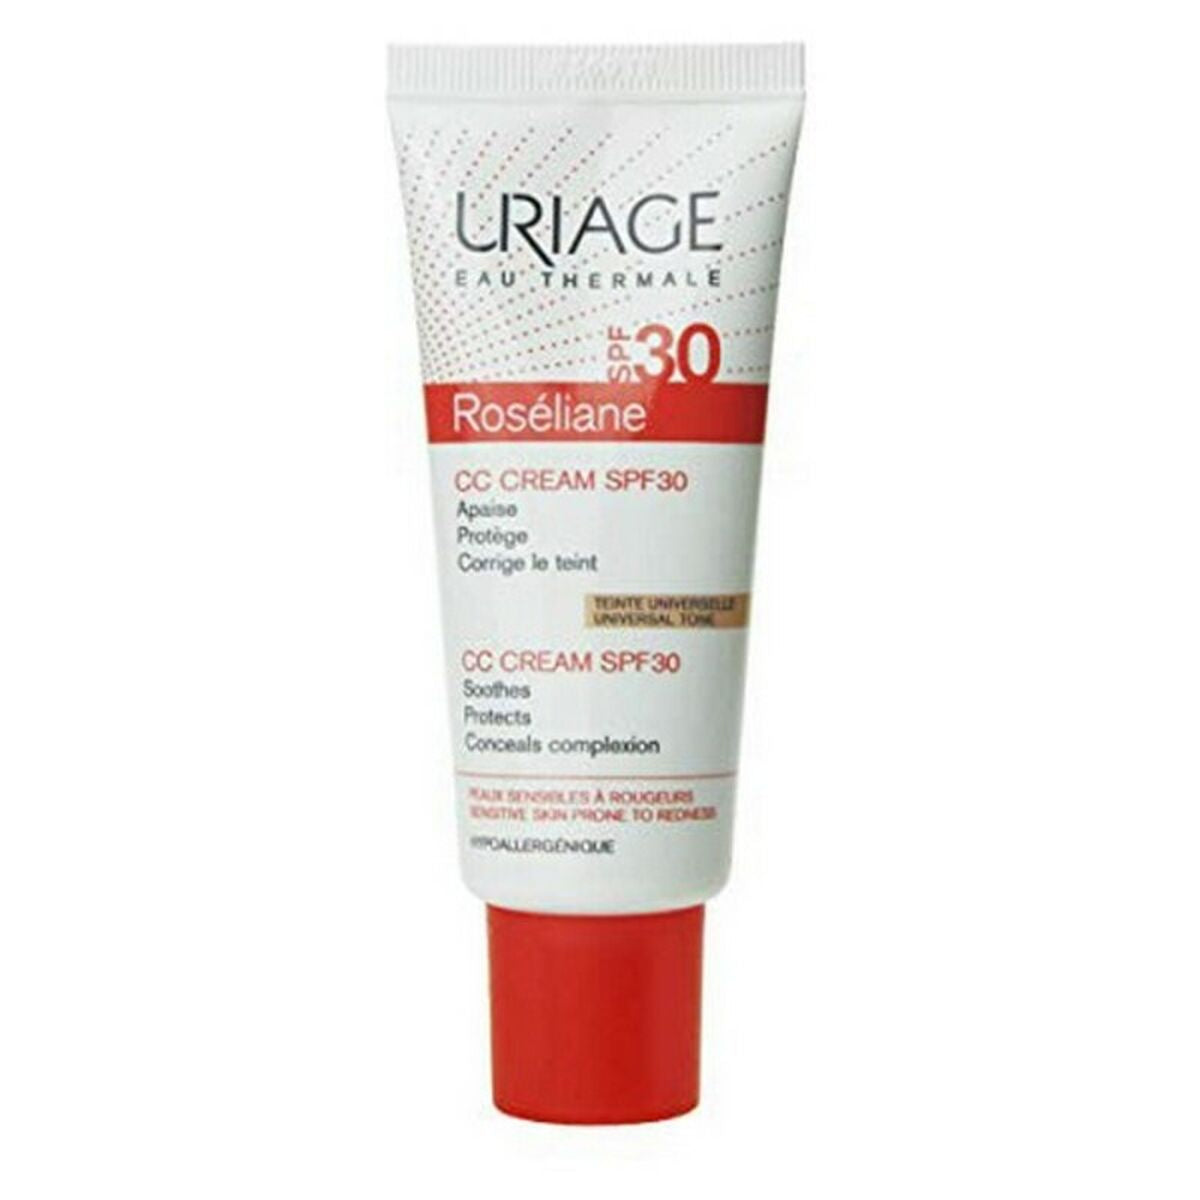 CC Cream Uriage Roséliane Cc 40 ml Beige Spf 30 | Uriage | Aylal Beauty